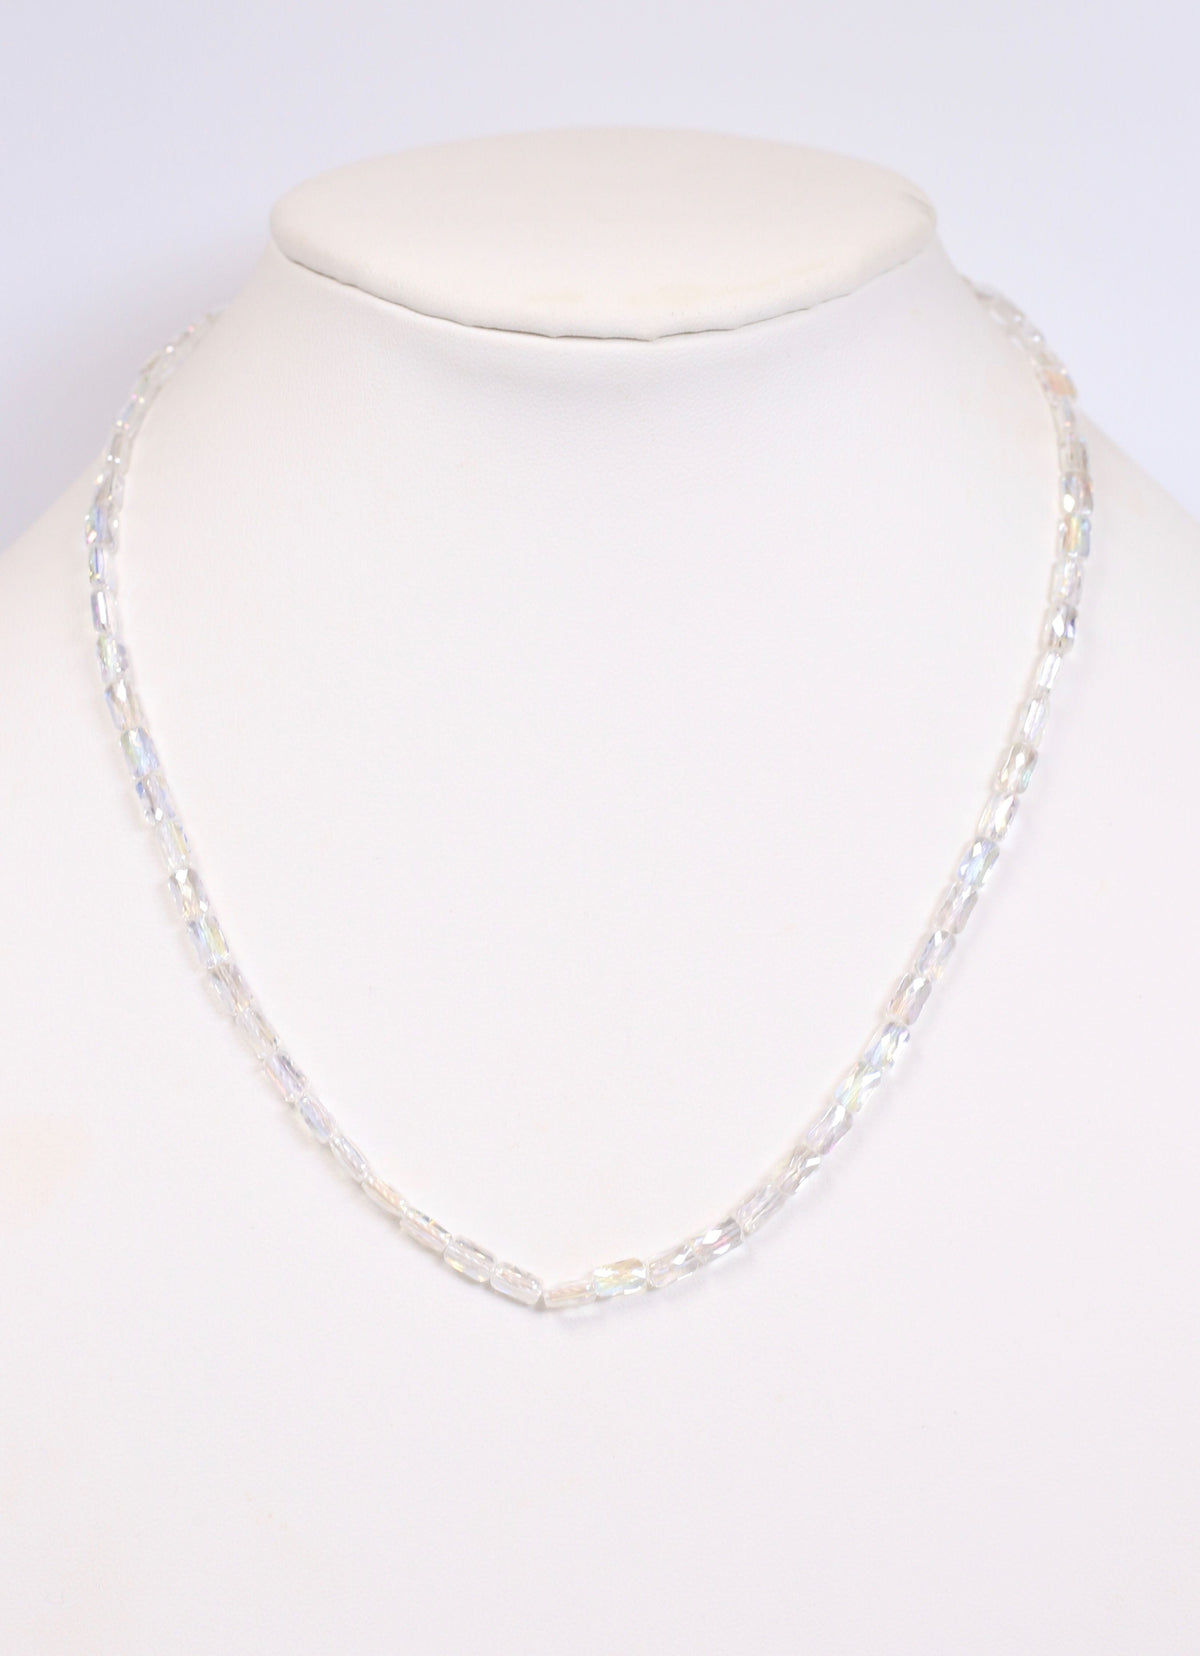 Everette Glass Bead Necklace CLEAR OPAL - Caroline Hill